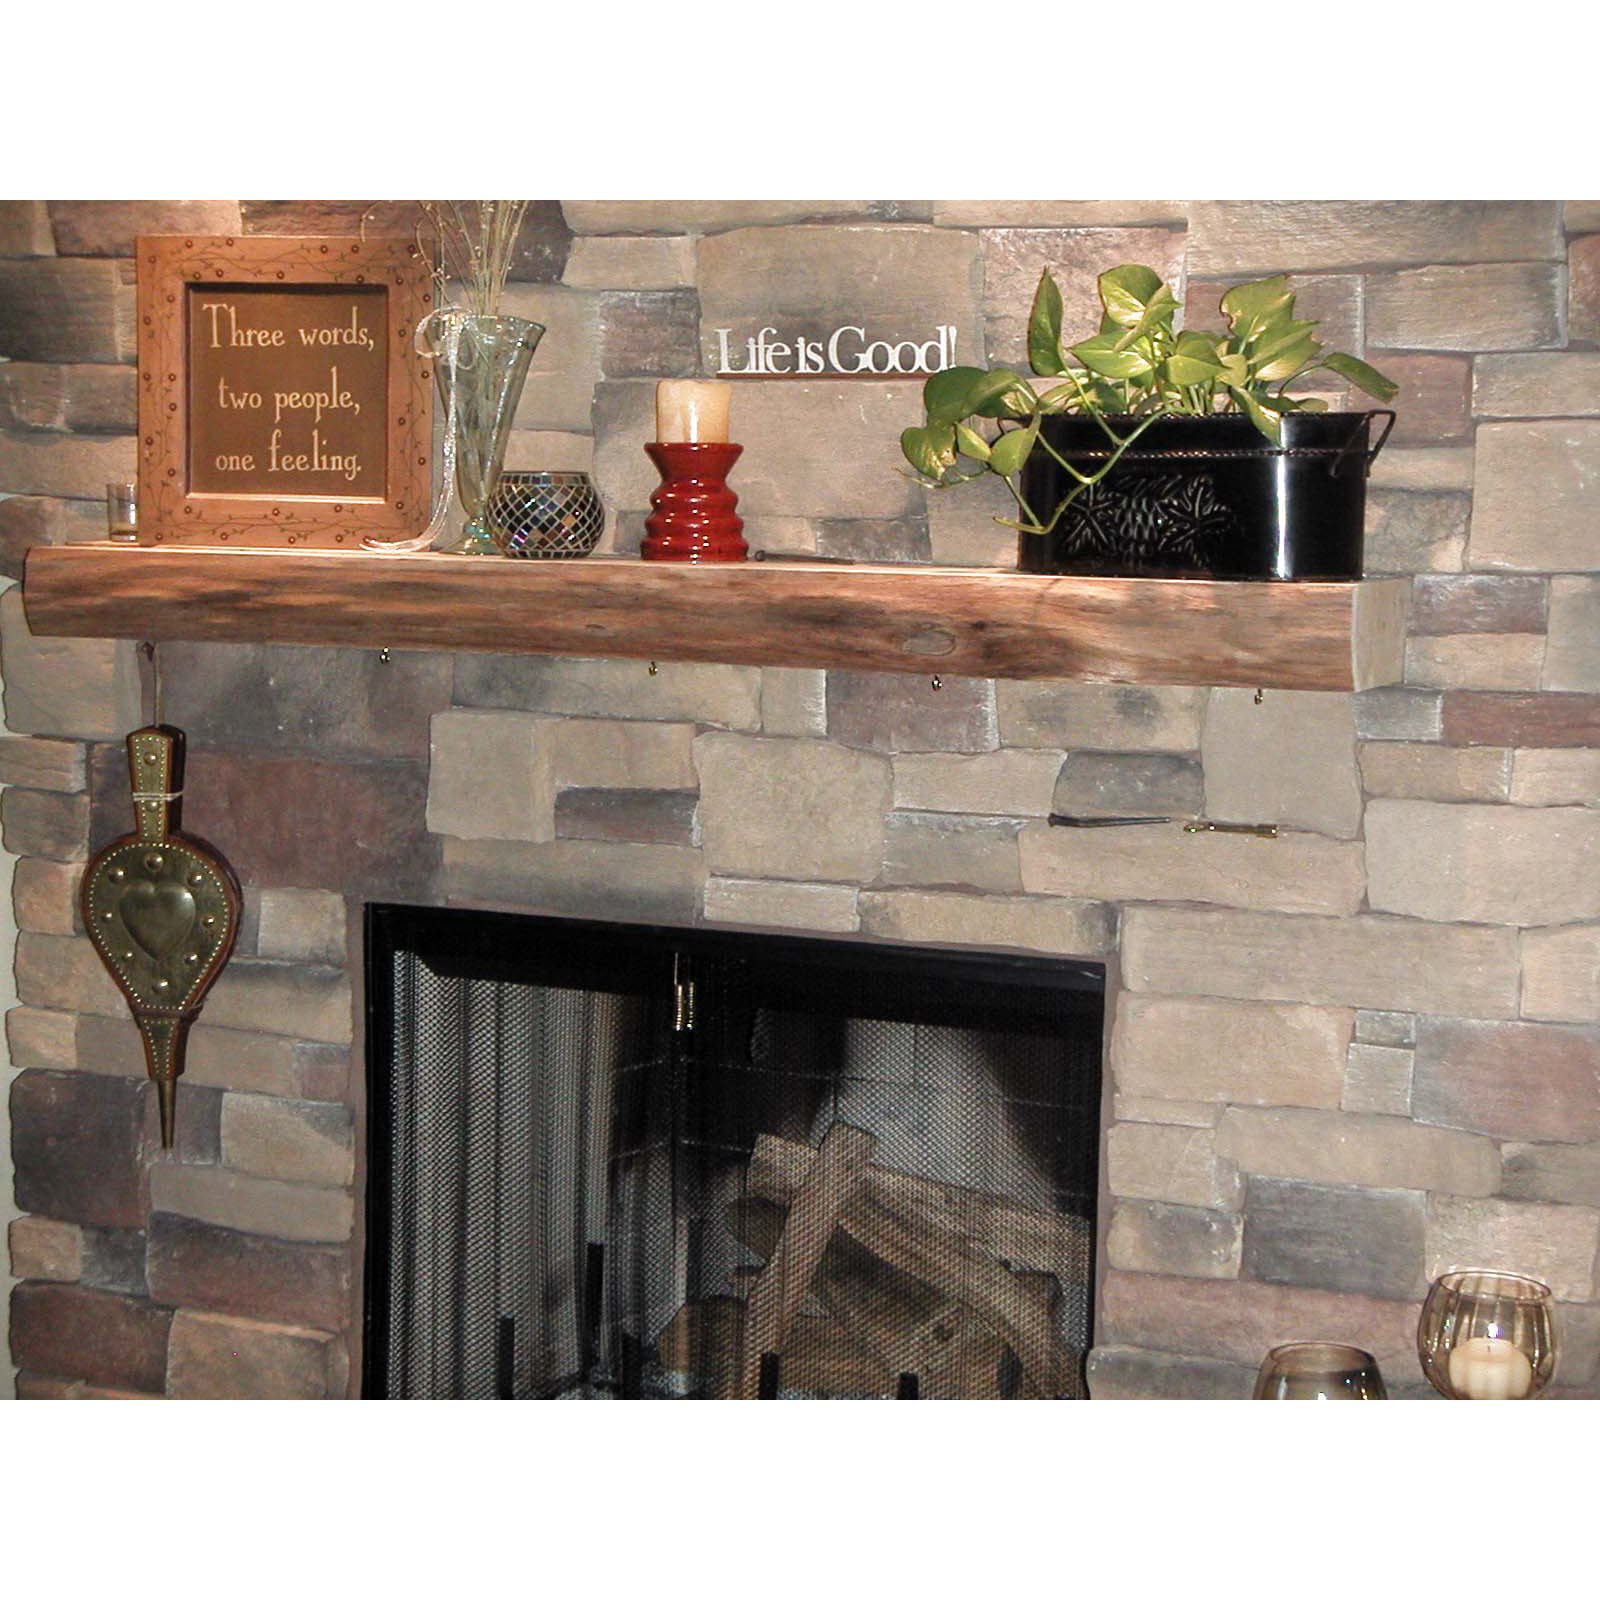 Free Shipping. Buy Kettle Moraine Hardwoods Morton Rustic Fireplace Mantel Shelf at Walmart.com